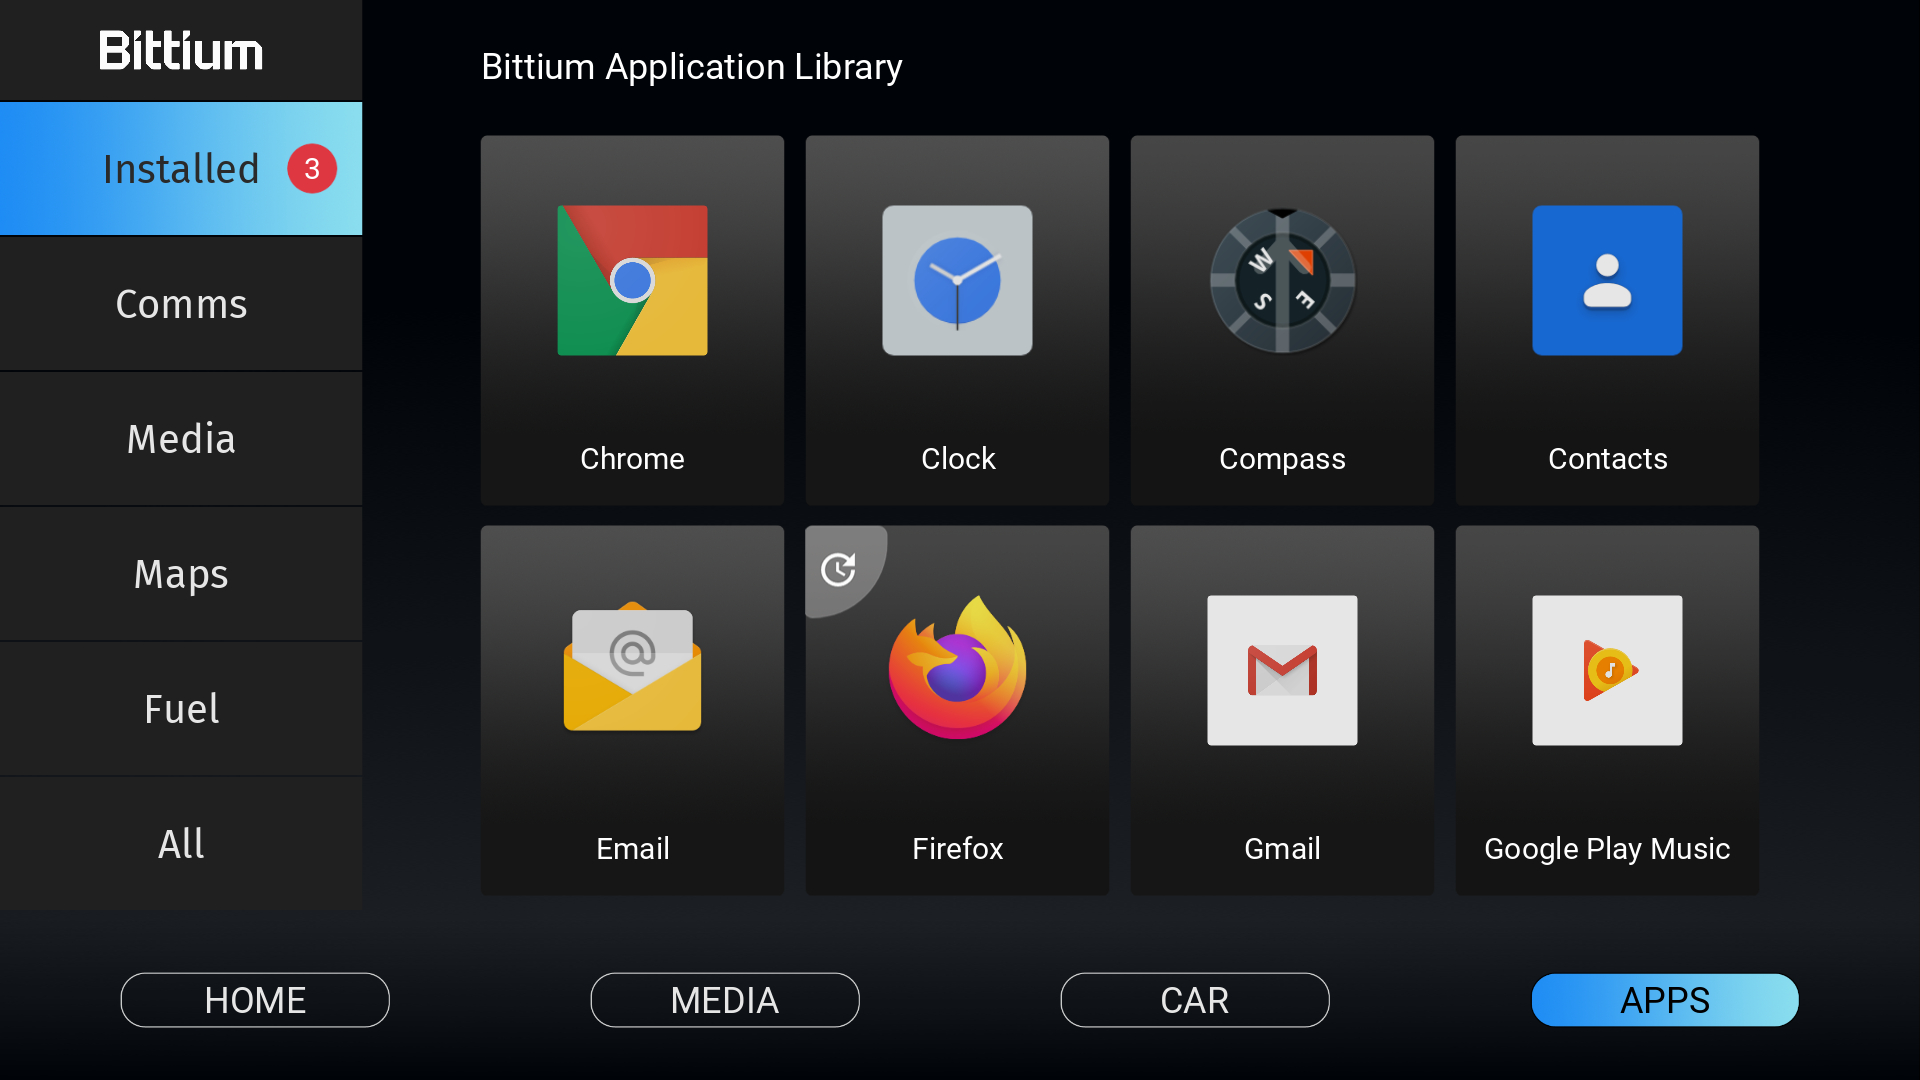 Bittium Application library